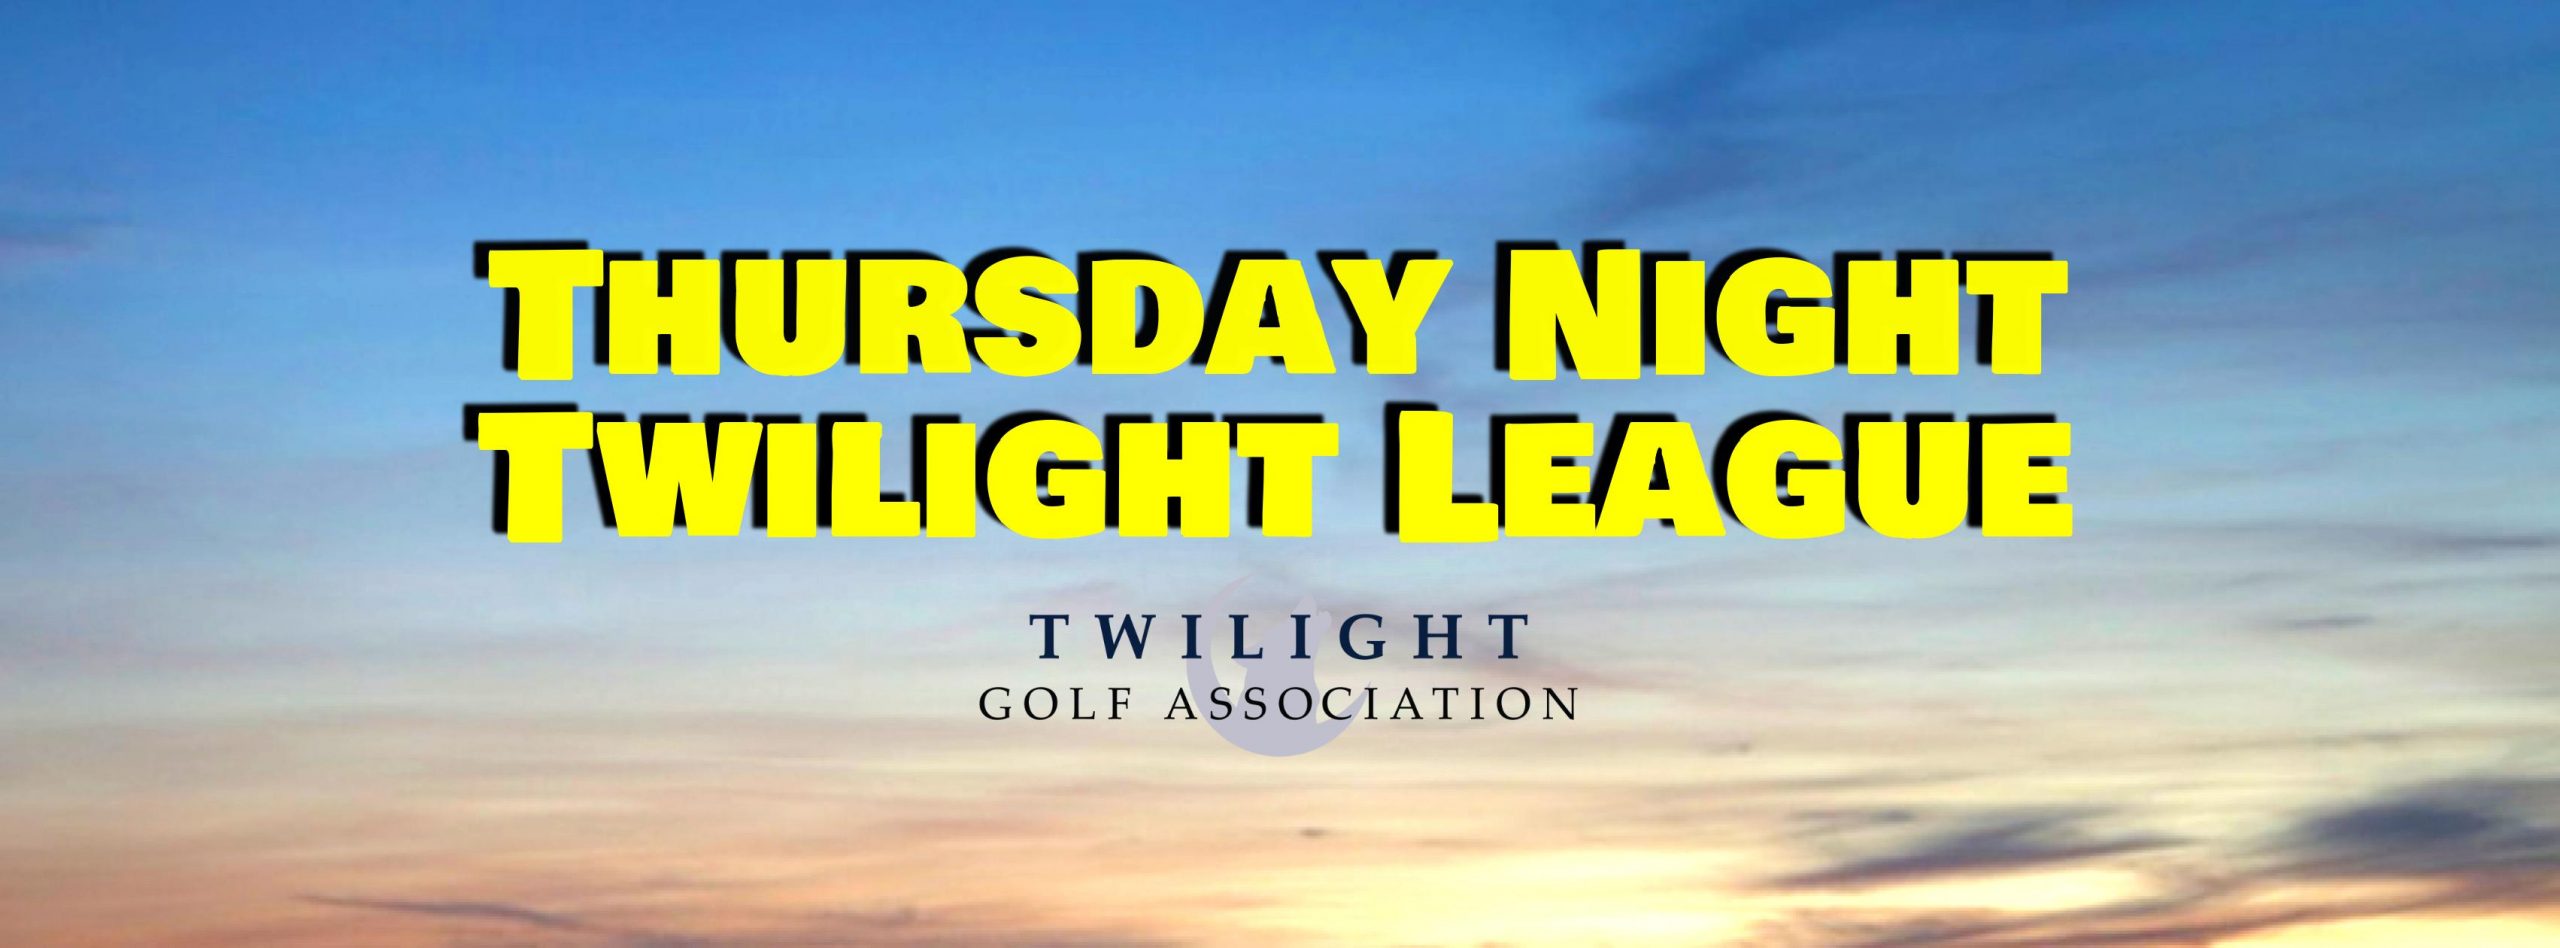 Thursday Twilight League at Riverwinds Golf Course